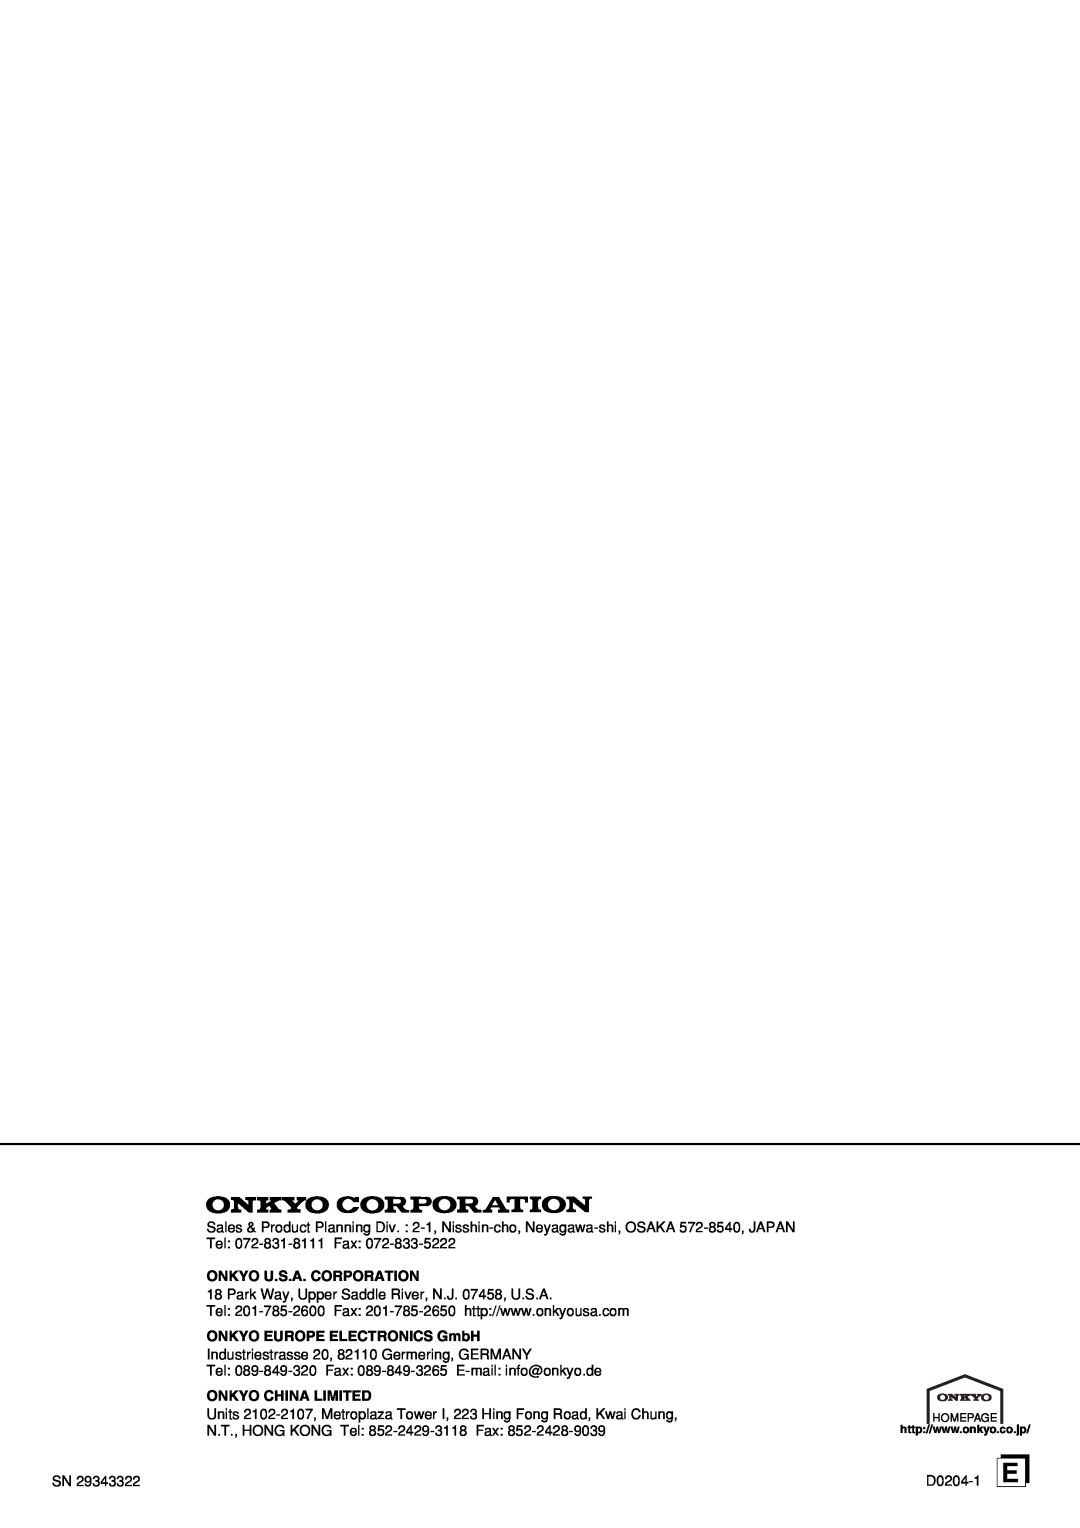 Onkyo D-N3X instruction manual Onkyo U.S.A. Corporation, ONKYO EUROPE ELECTRONICS GmbH, Onkyo China Limited 